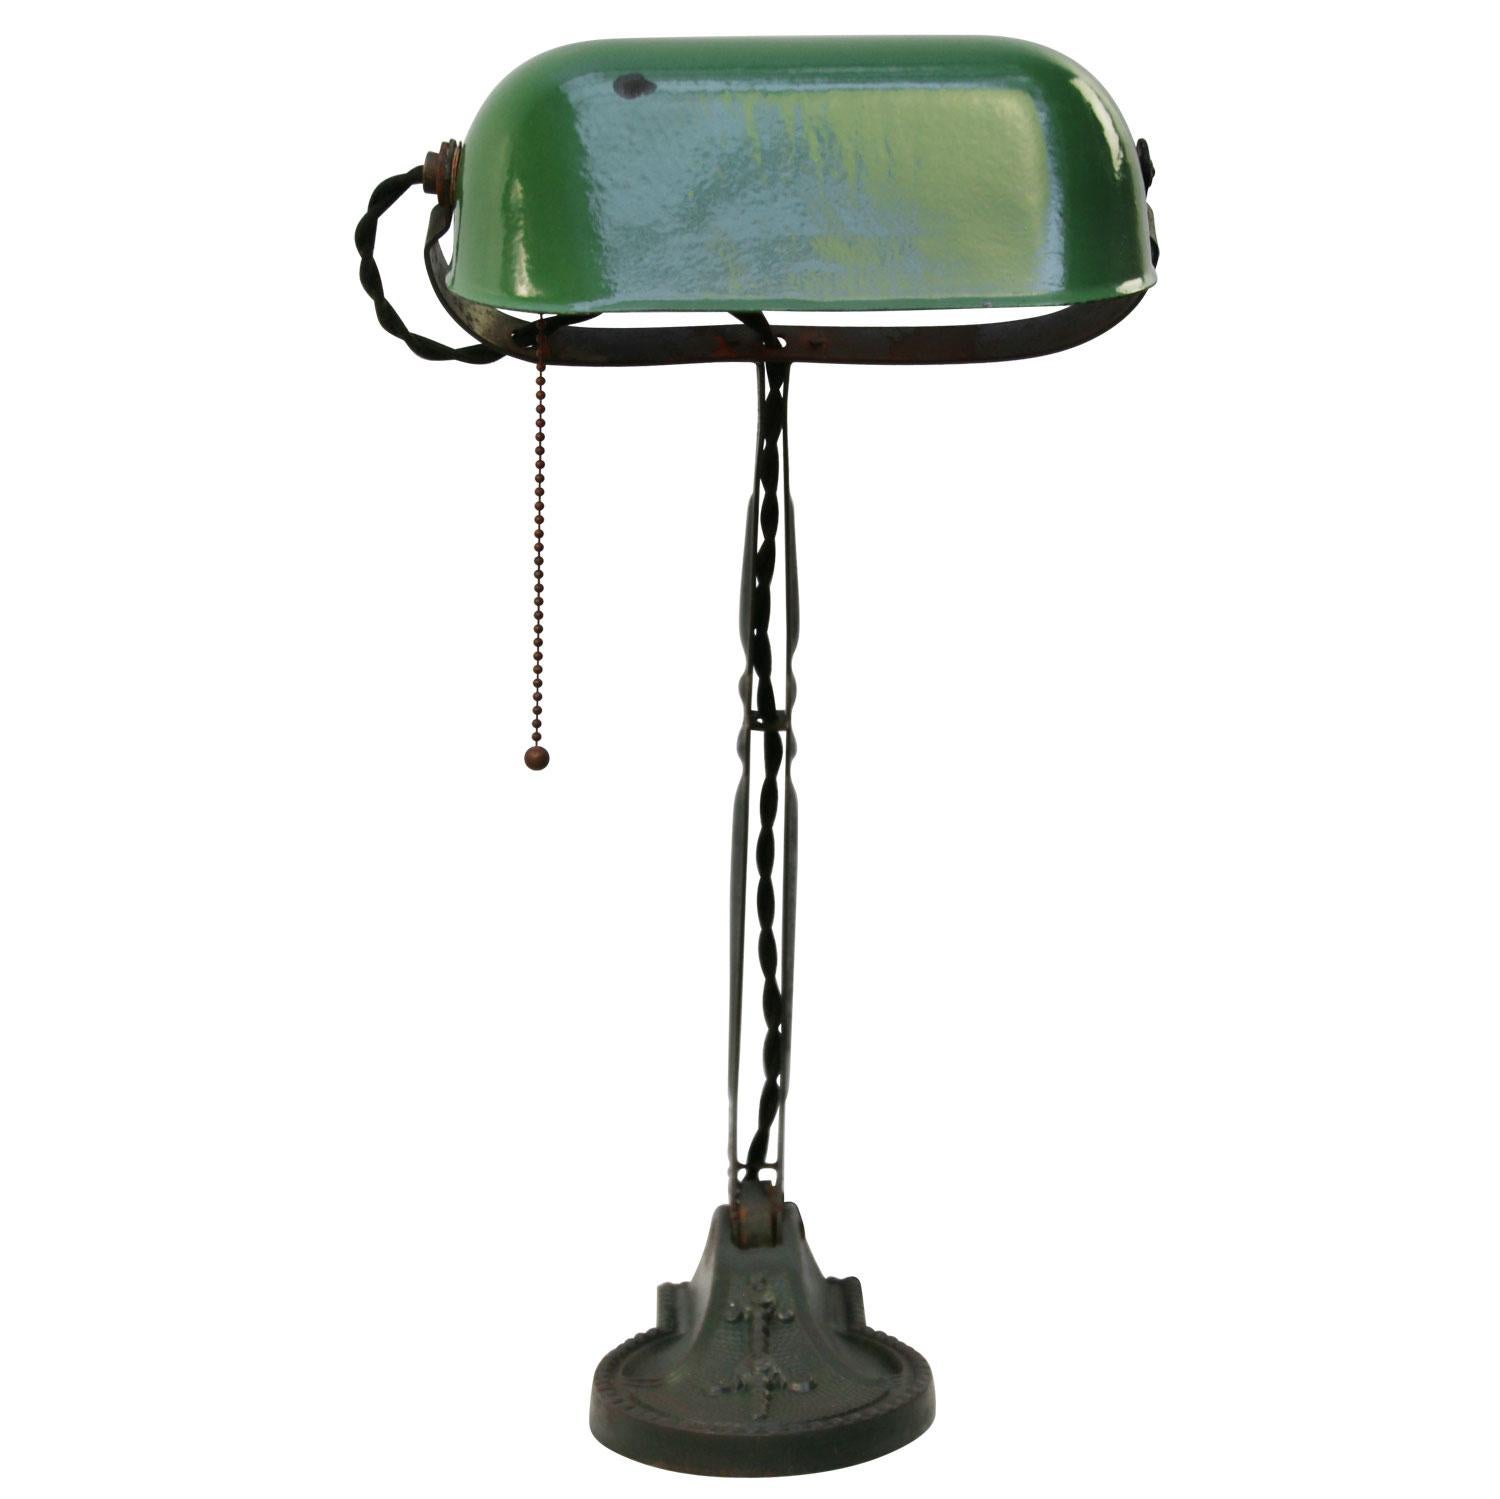 Cast Hungarian Green Enamel Vintage Industrial Work Light Table Desk Light